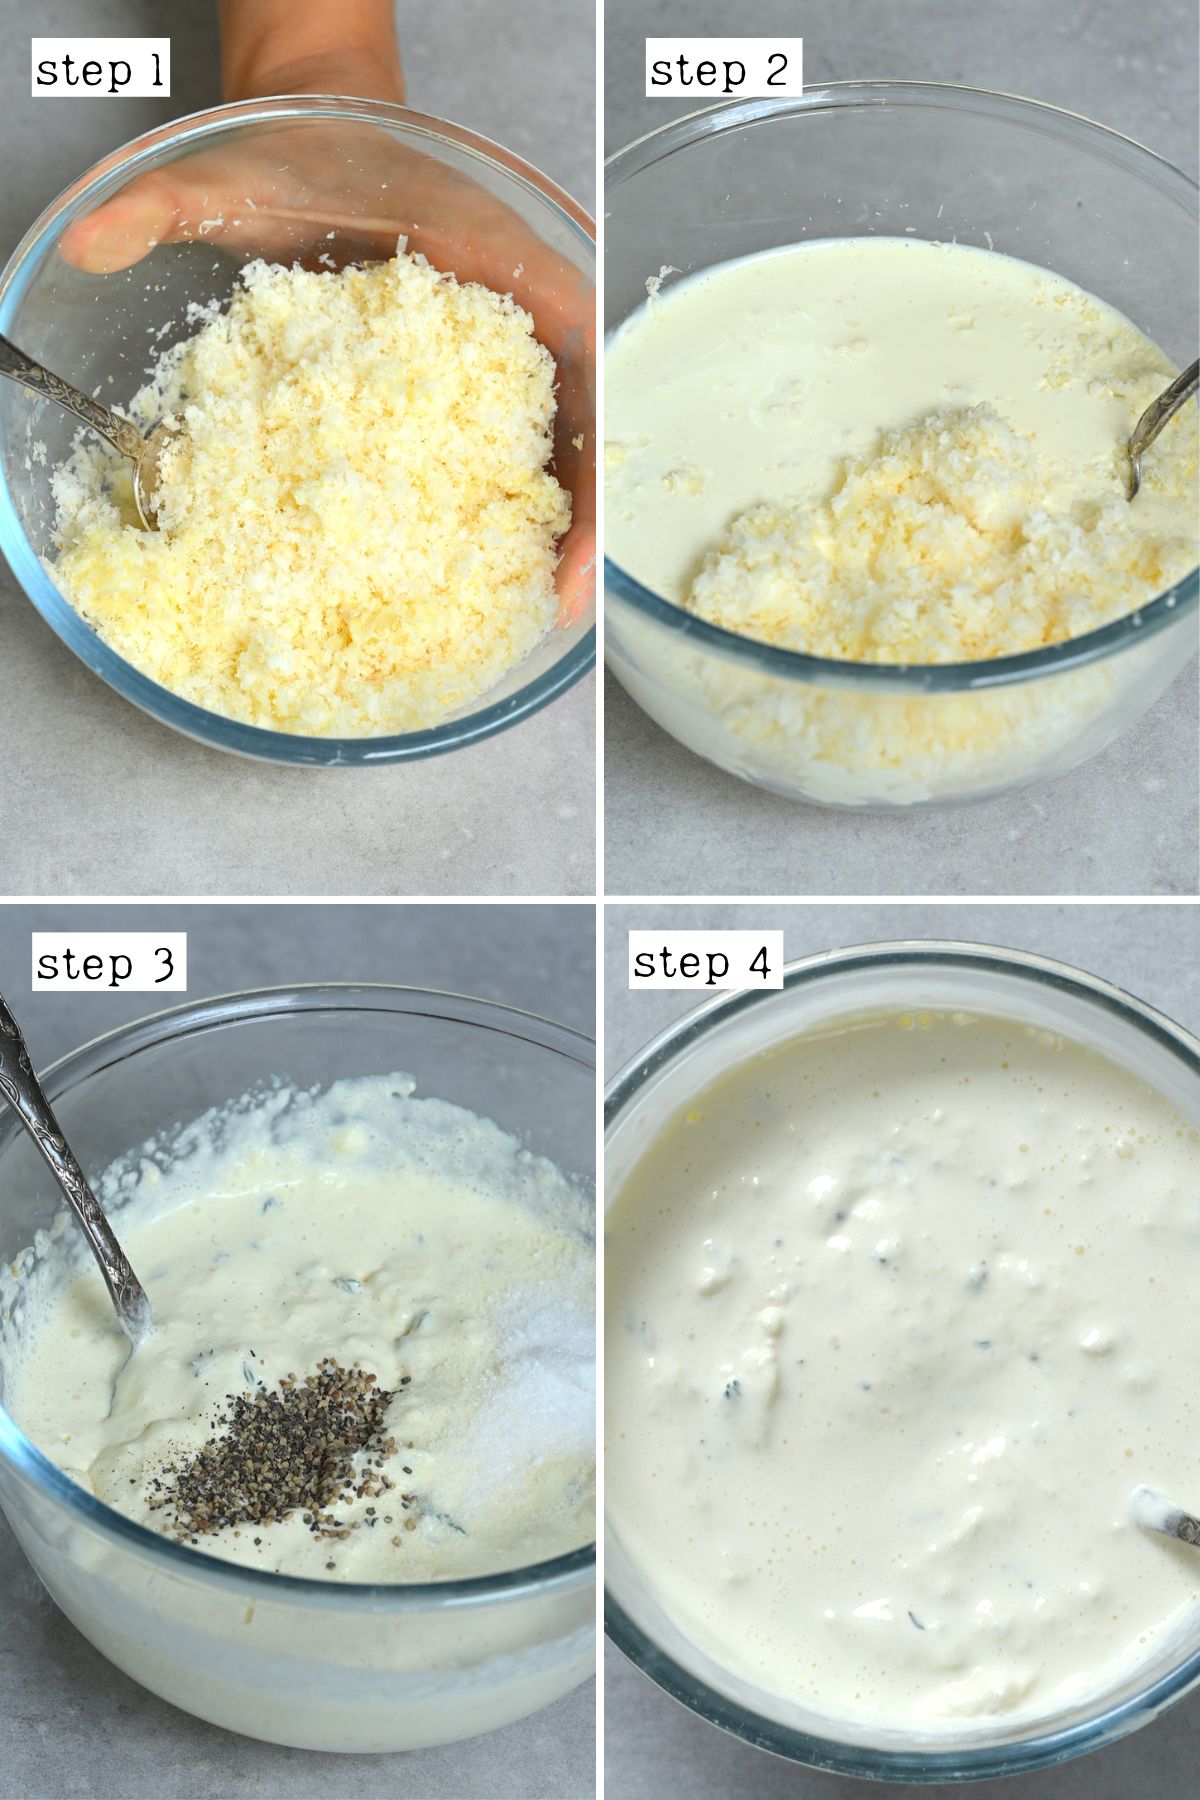 Steps for preparing cream mixture